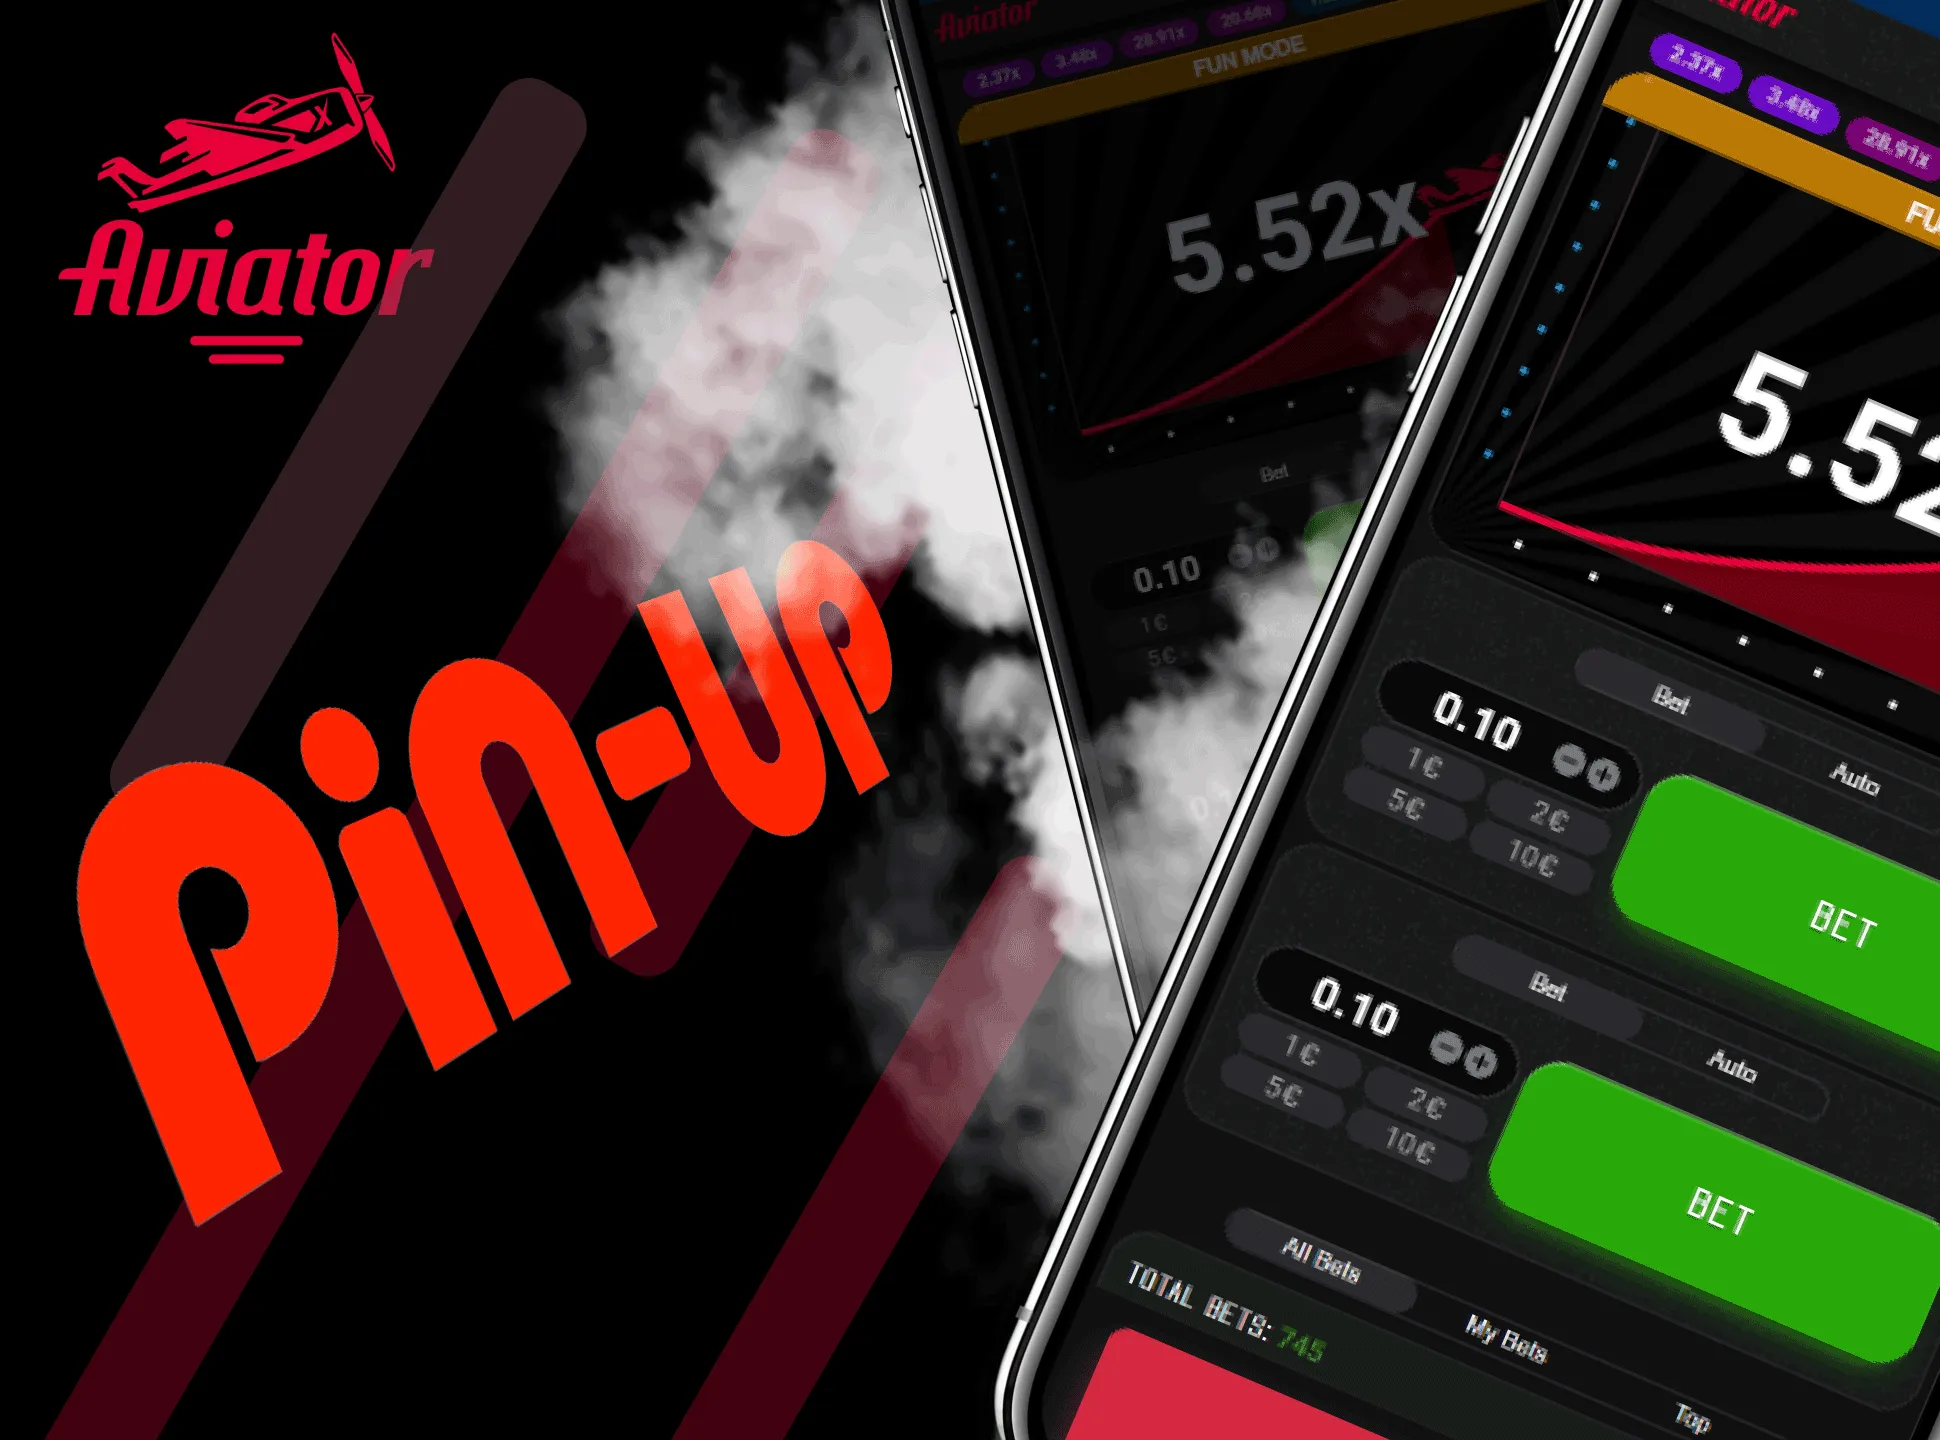 Play Aviator in the Pin Up casino app.